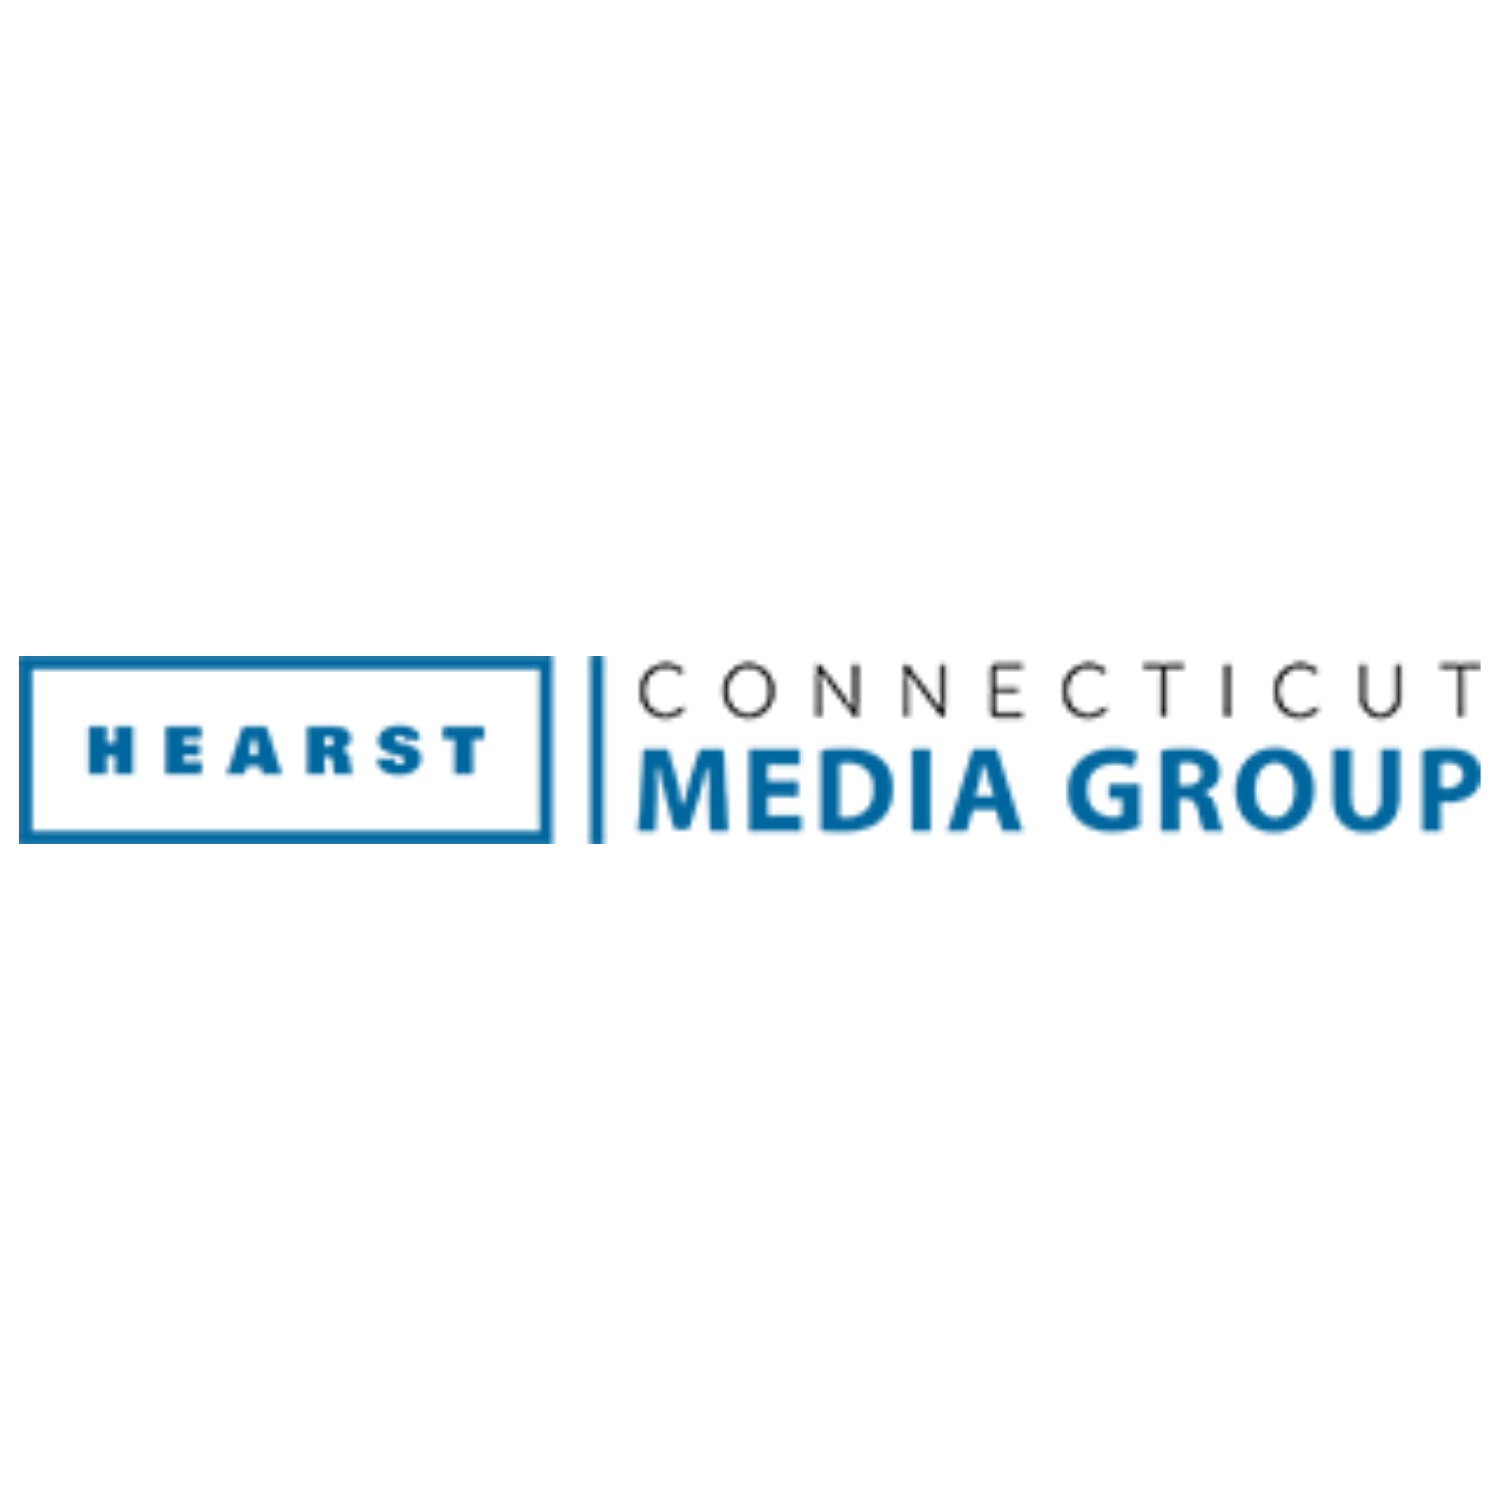 Hearst Connecticut Media Group